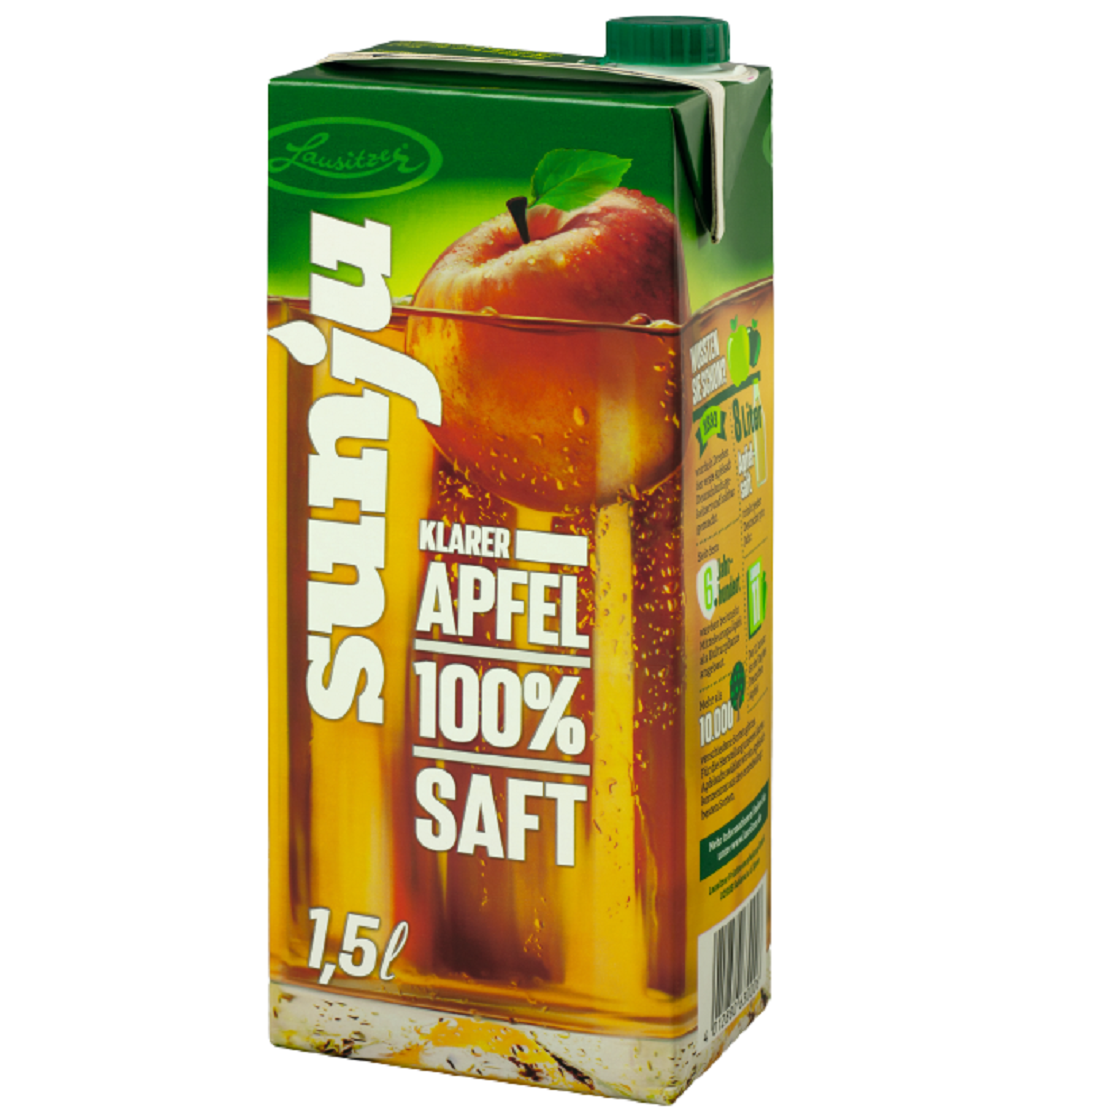 Sunju „Klarer Apfel“ 100% Saft 8x1,5l